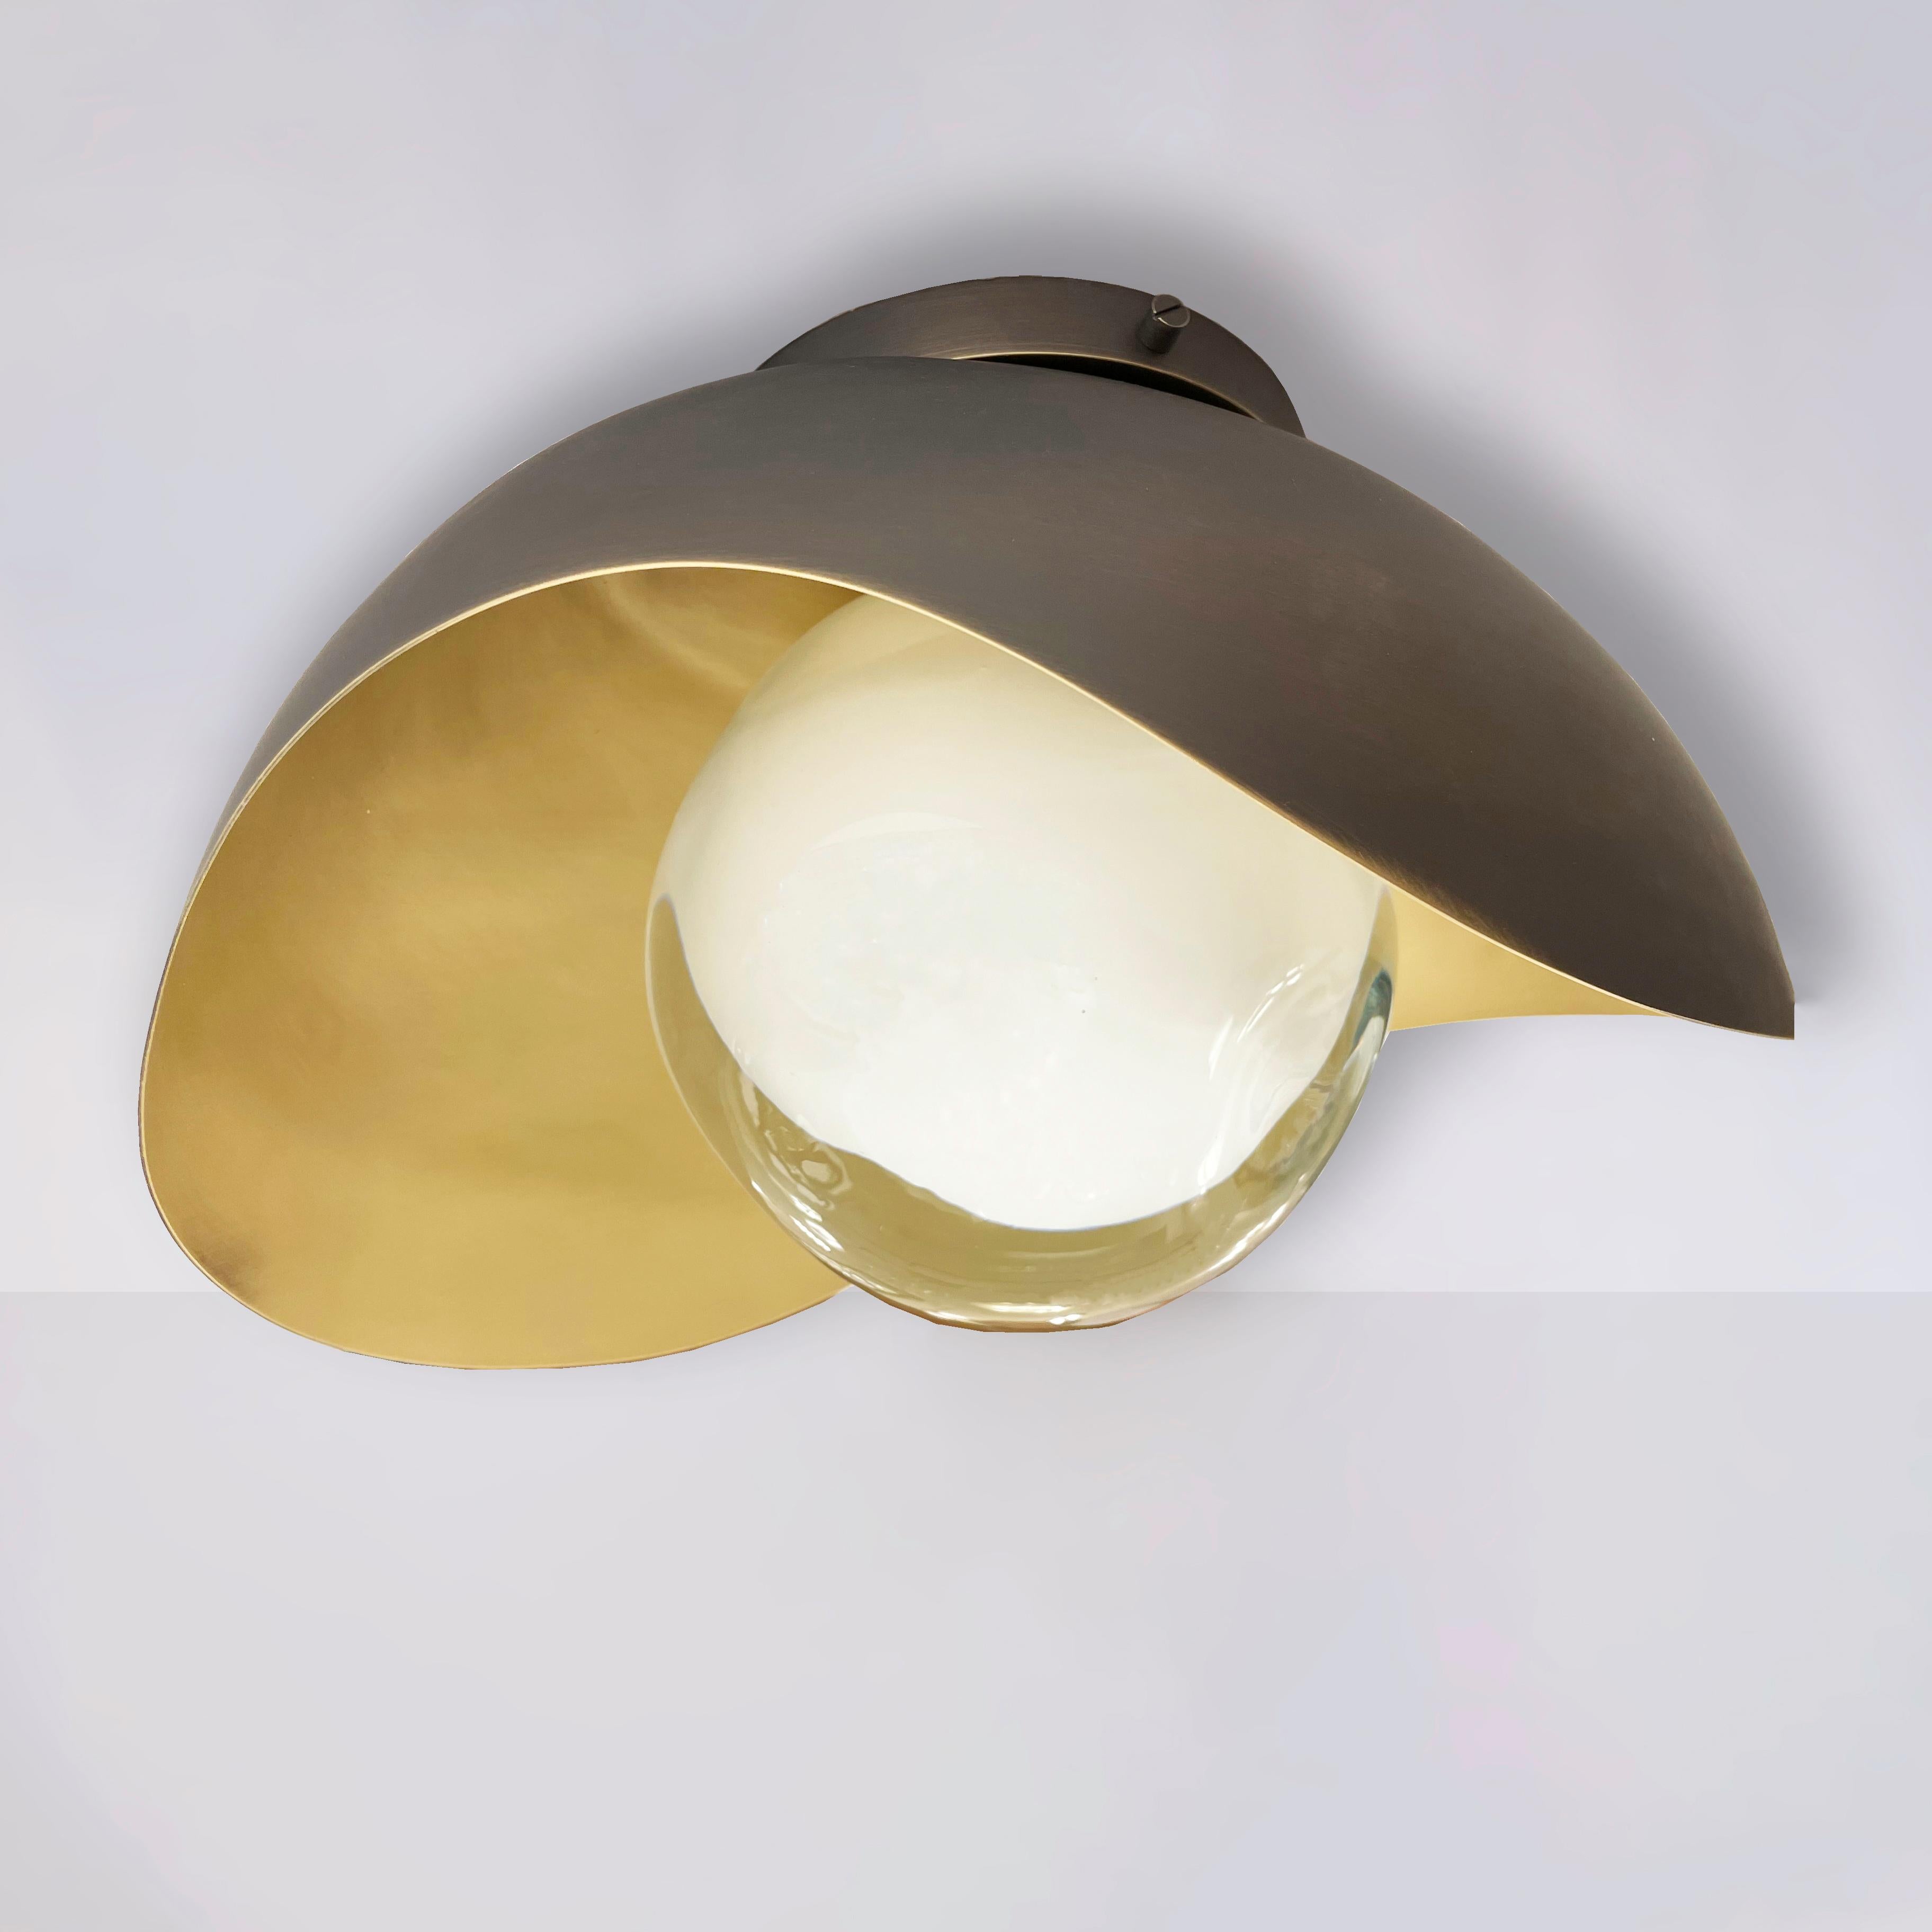 Perla Flushmount Ceiling Light by Gaspare Asaro-Satin Brass/Acqua Finish For Sale 4